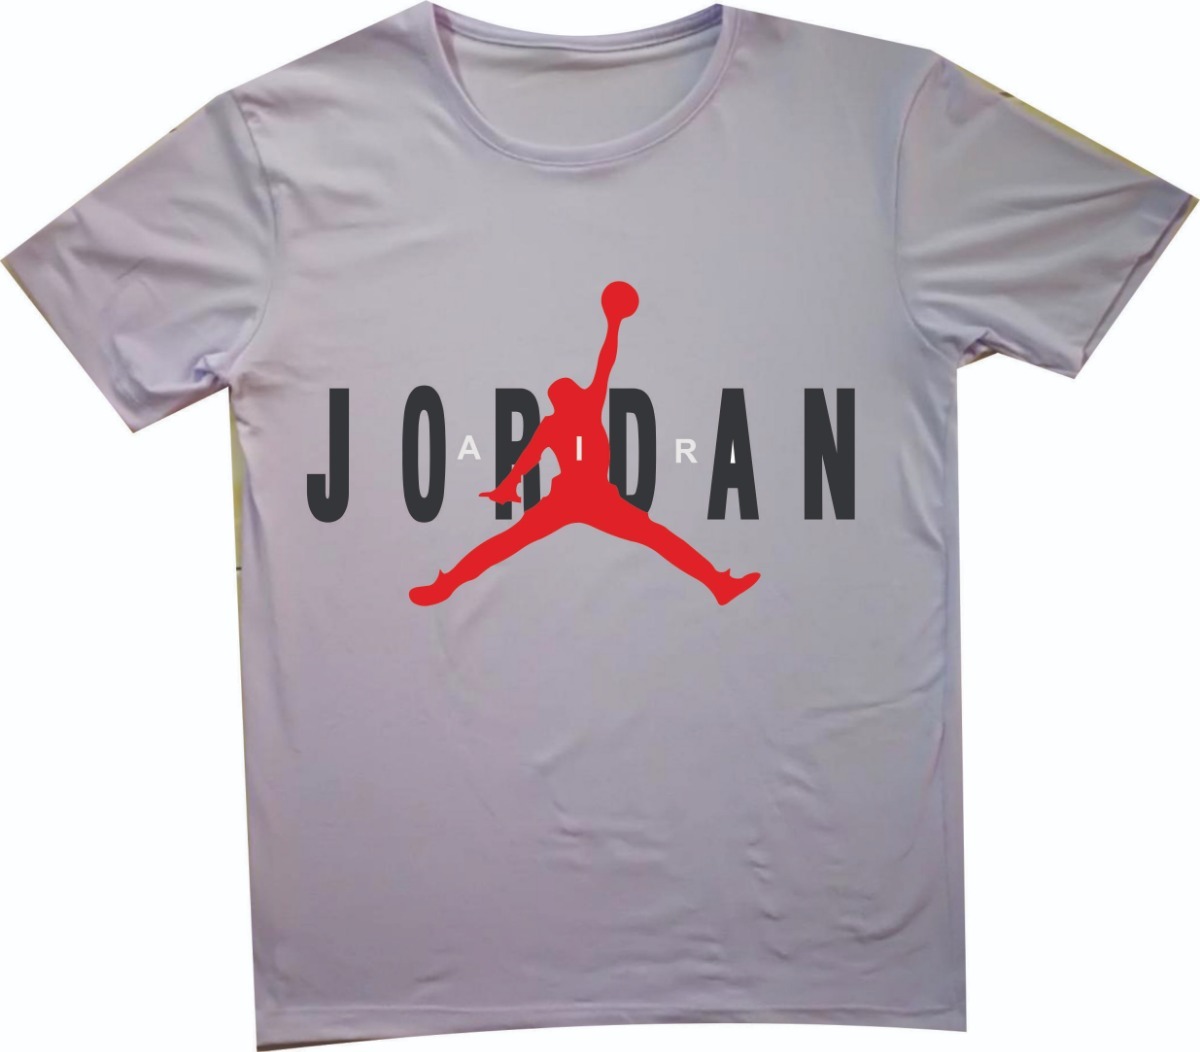 camisetas jordan para mujer outlet online 428e6 35f1d